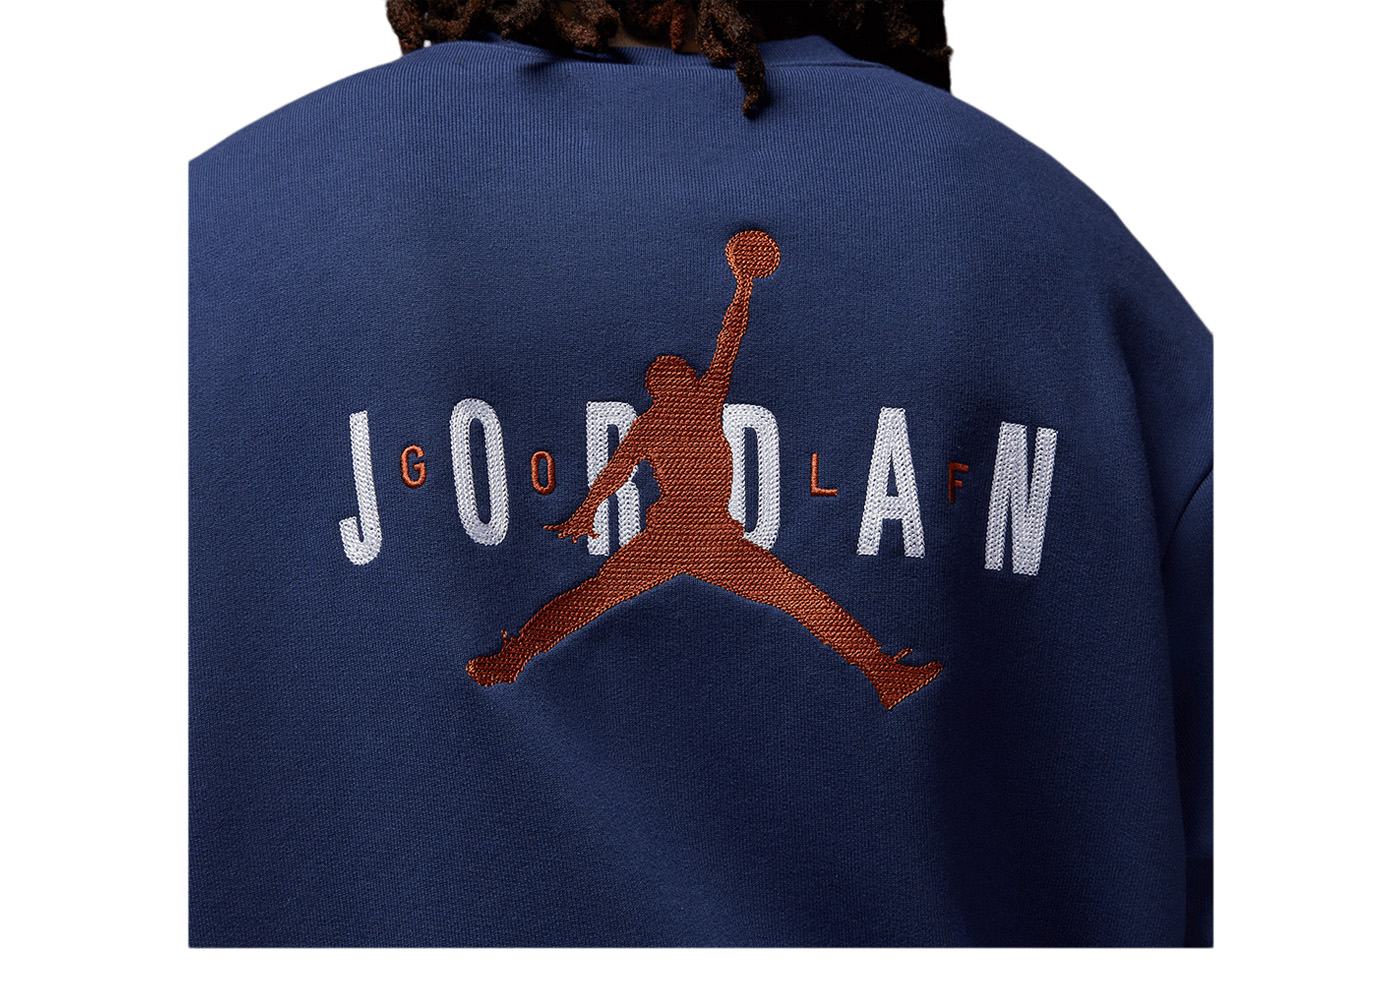 Jordan x Eastside Golf Cardigan Navy